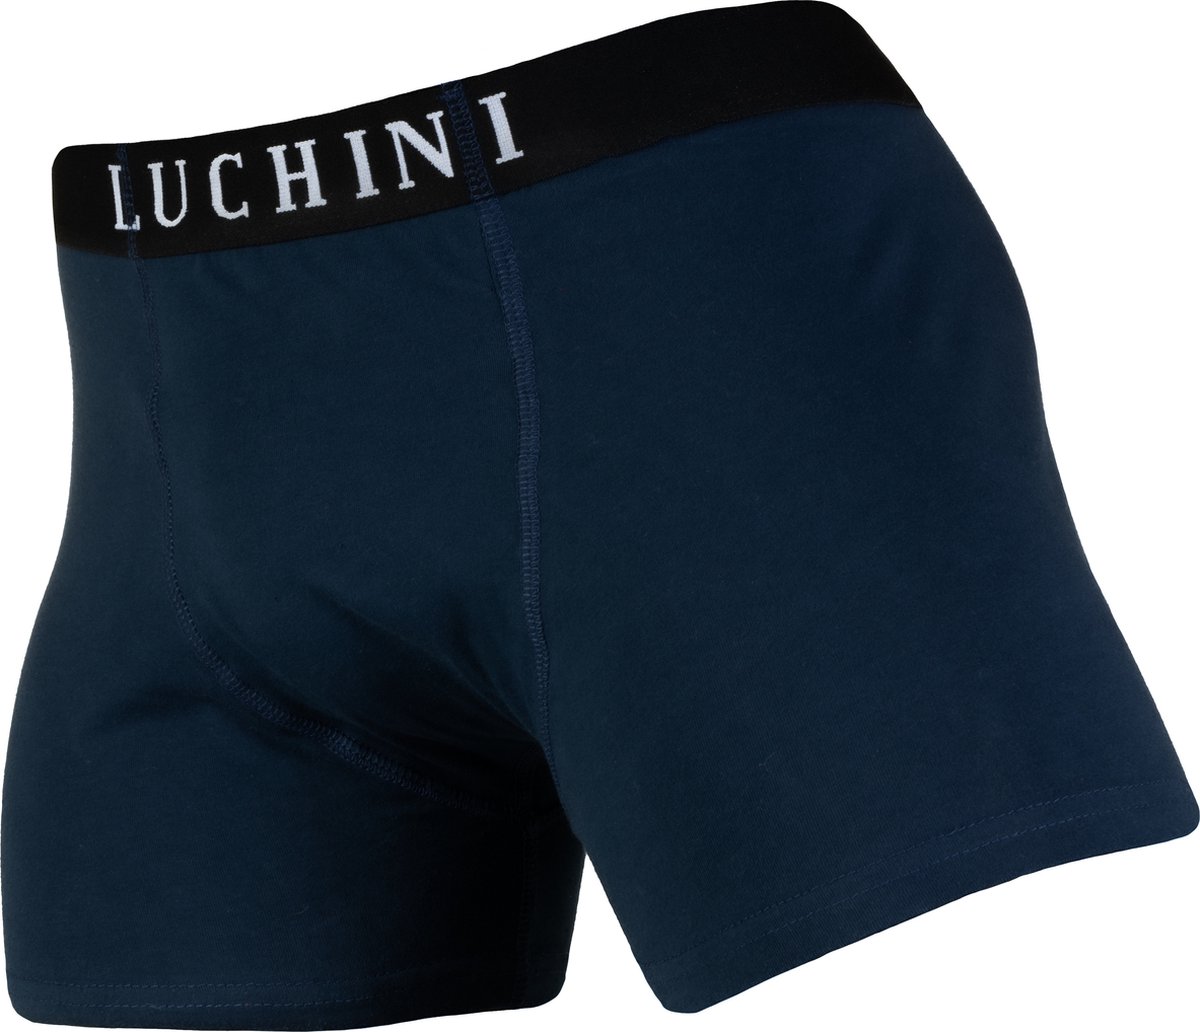 Luchini Clothing ® - LC Classic Maat L - Premium Boxershorts heren - Heren Privacy Boxers met verborgen vak - 2-PACK boxershorts - Stealth boxers - Blauw